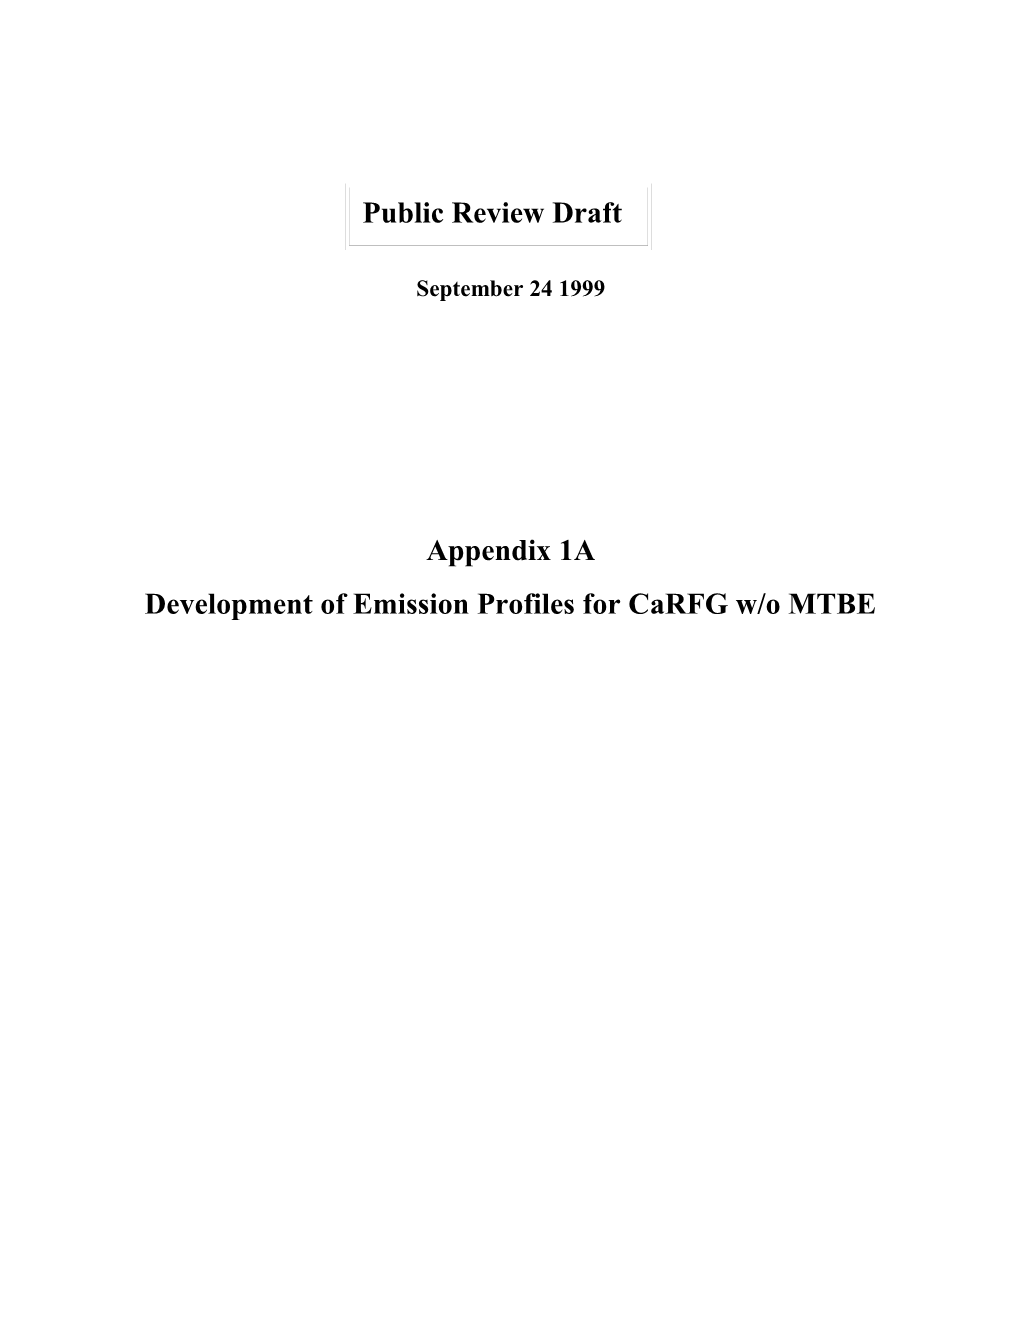 Development of Emission Profiles for Carfg W/O MTBE